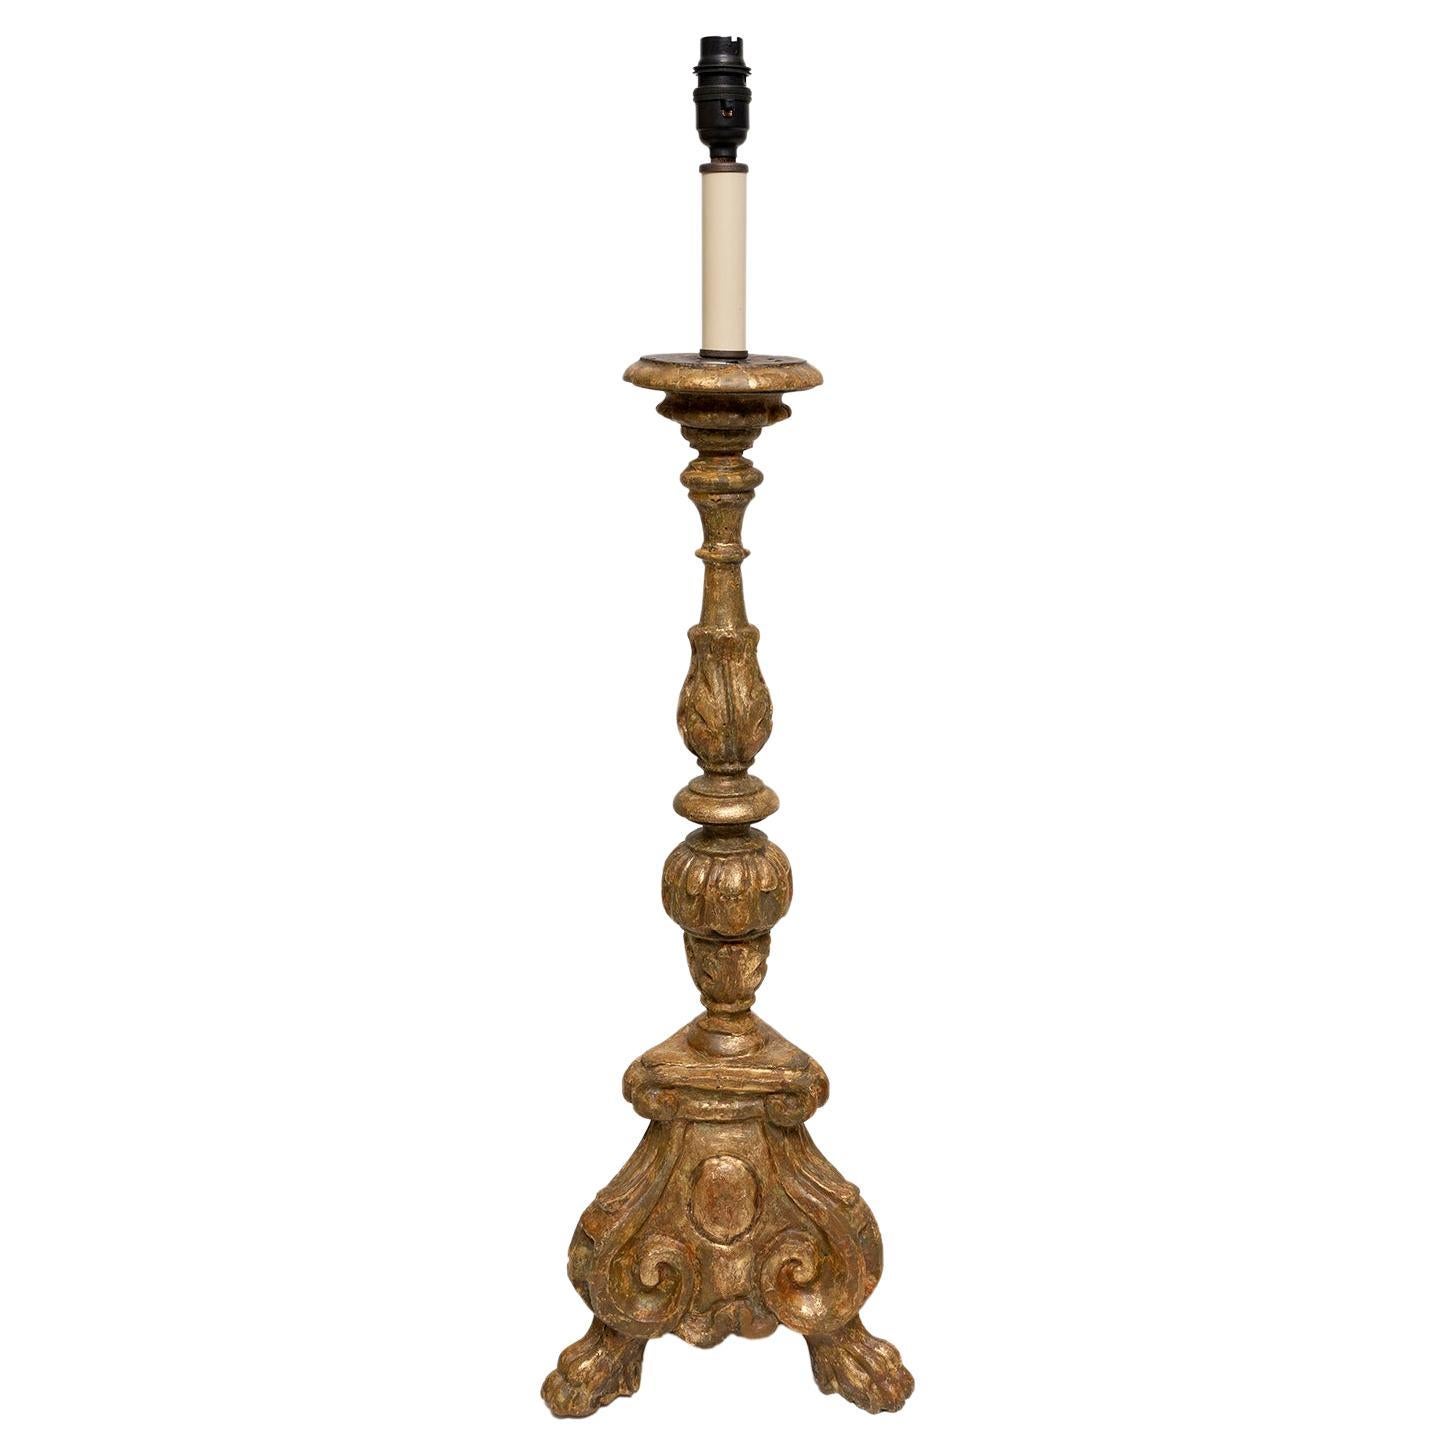 Tischlampe Kerzenleuchter Vergoldet 18. Jahrhundert Barock Italienisch 81cm 32"" hoch